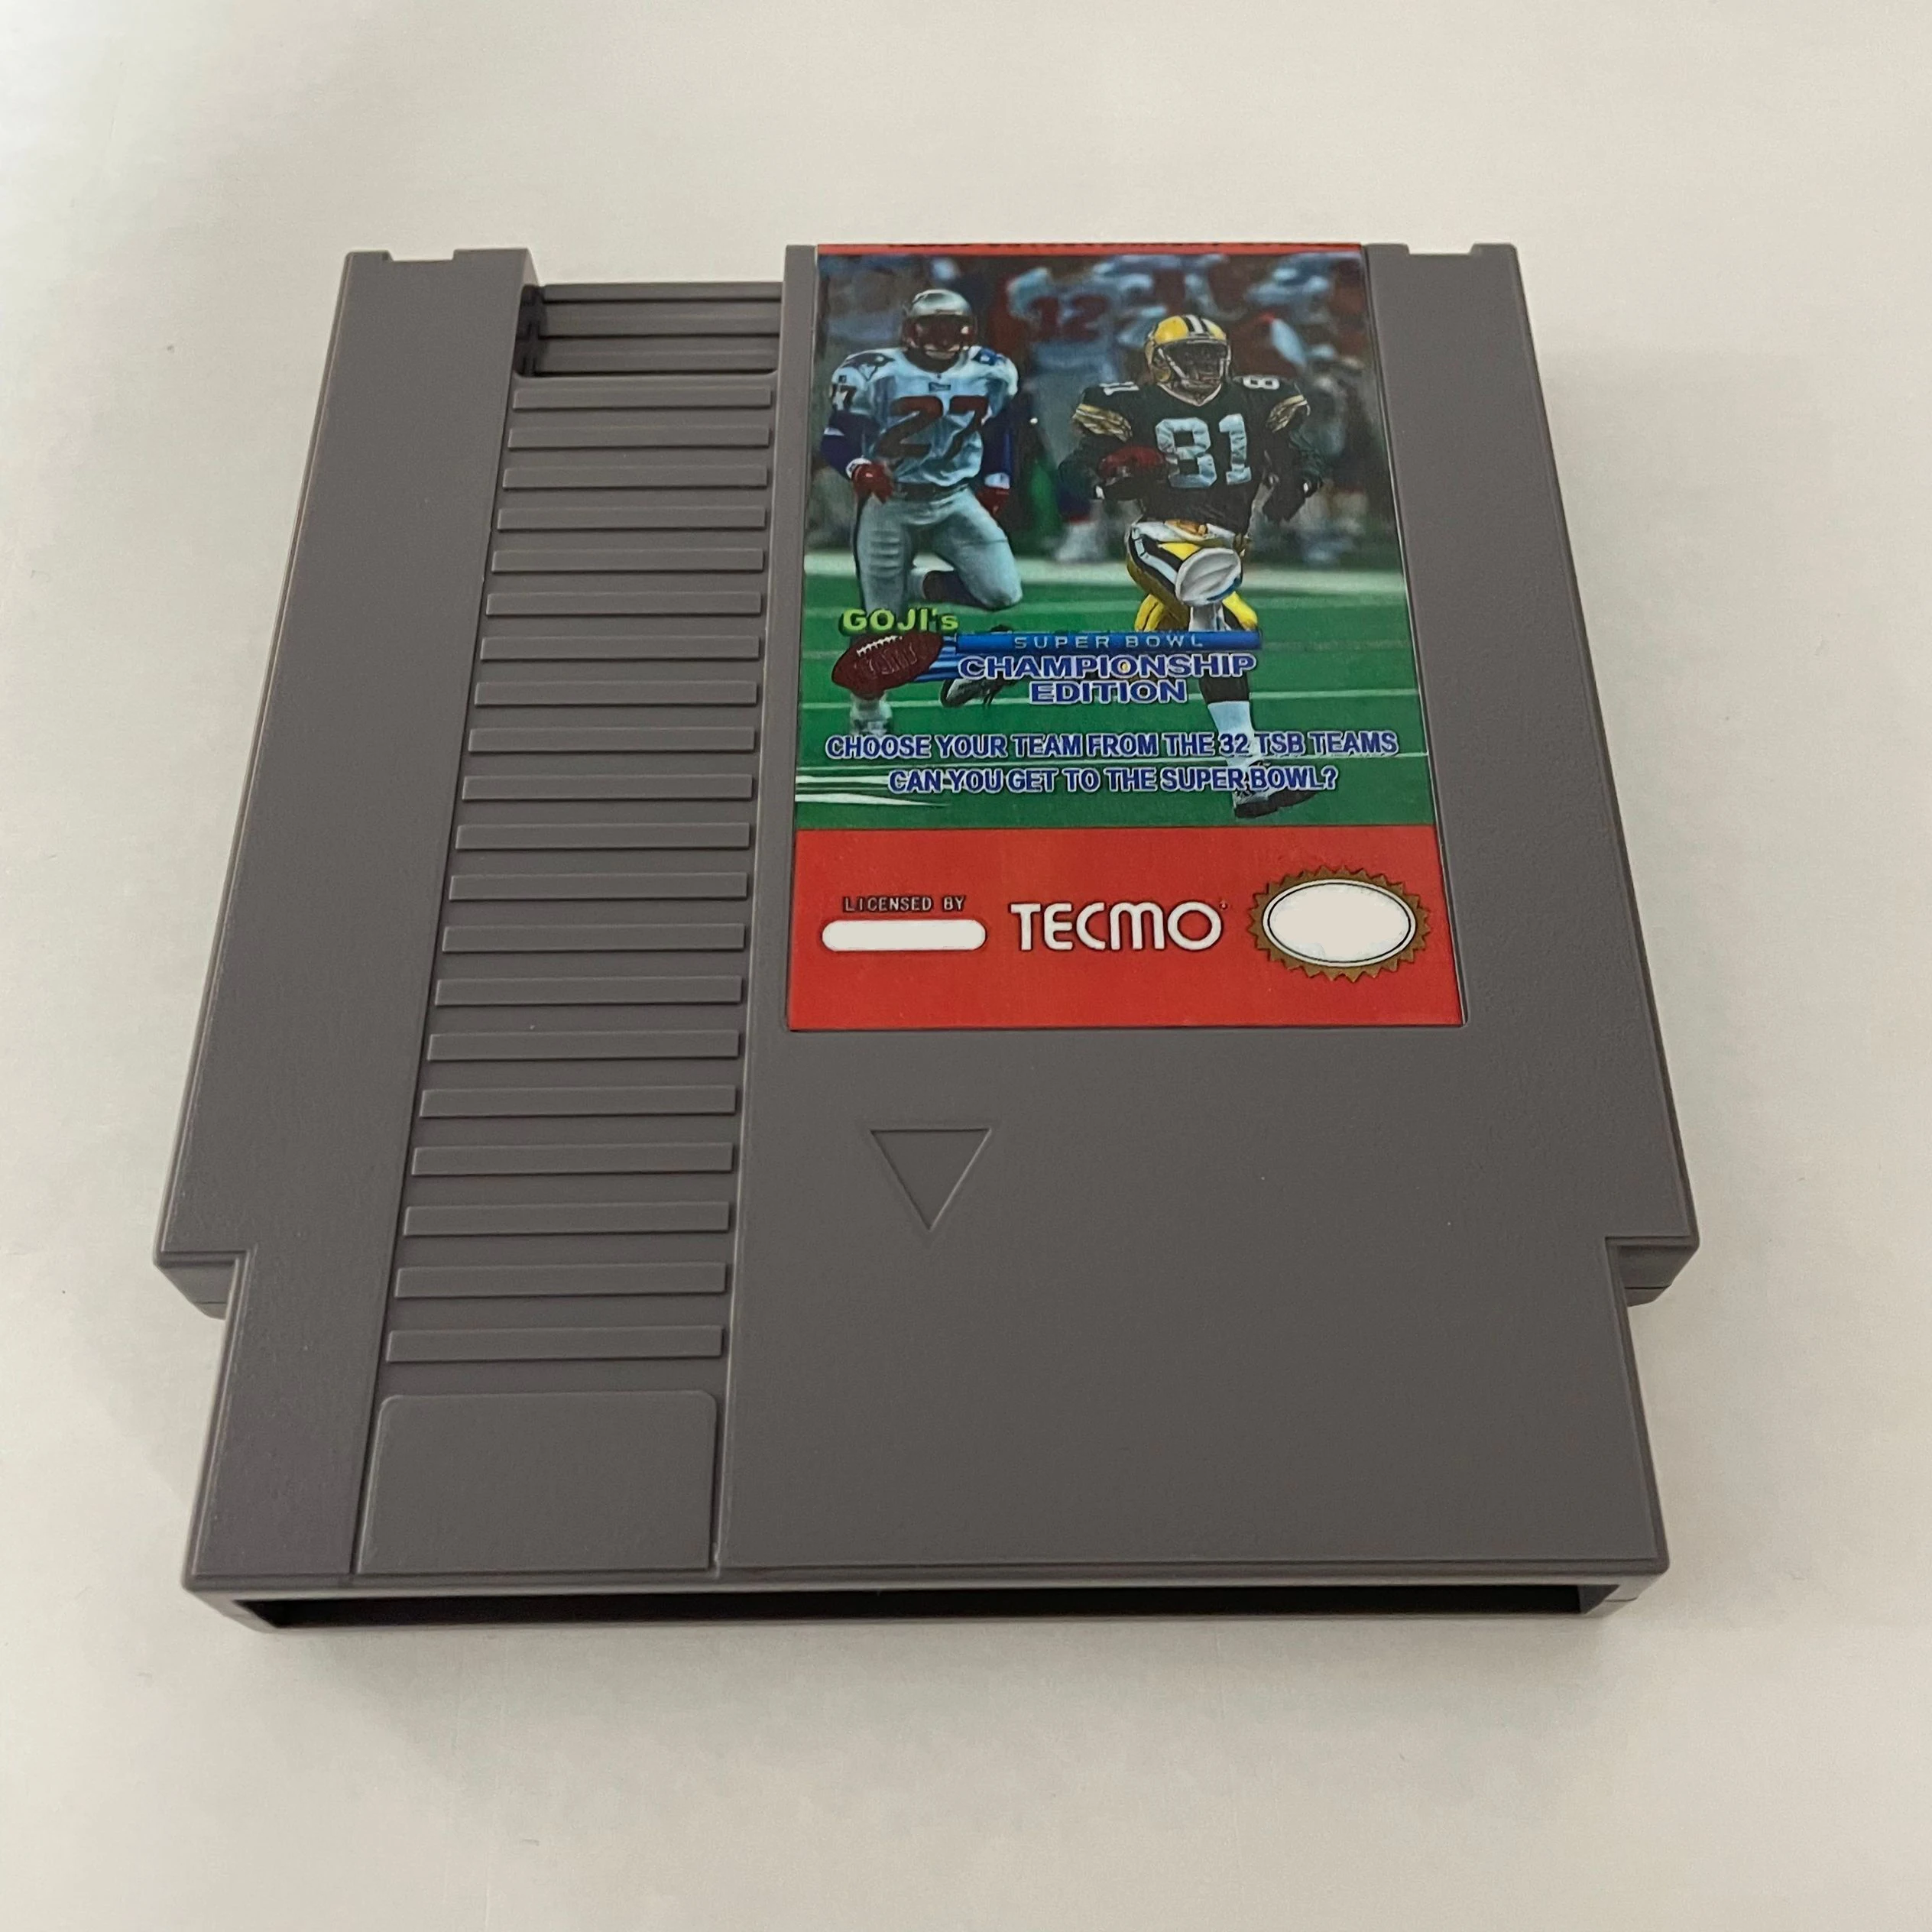 Goji's Tecmo Super Bowl Championship Edition - NES Game Cartridge For 72 Pins 8 Bit Video Game Console